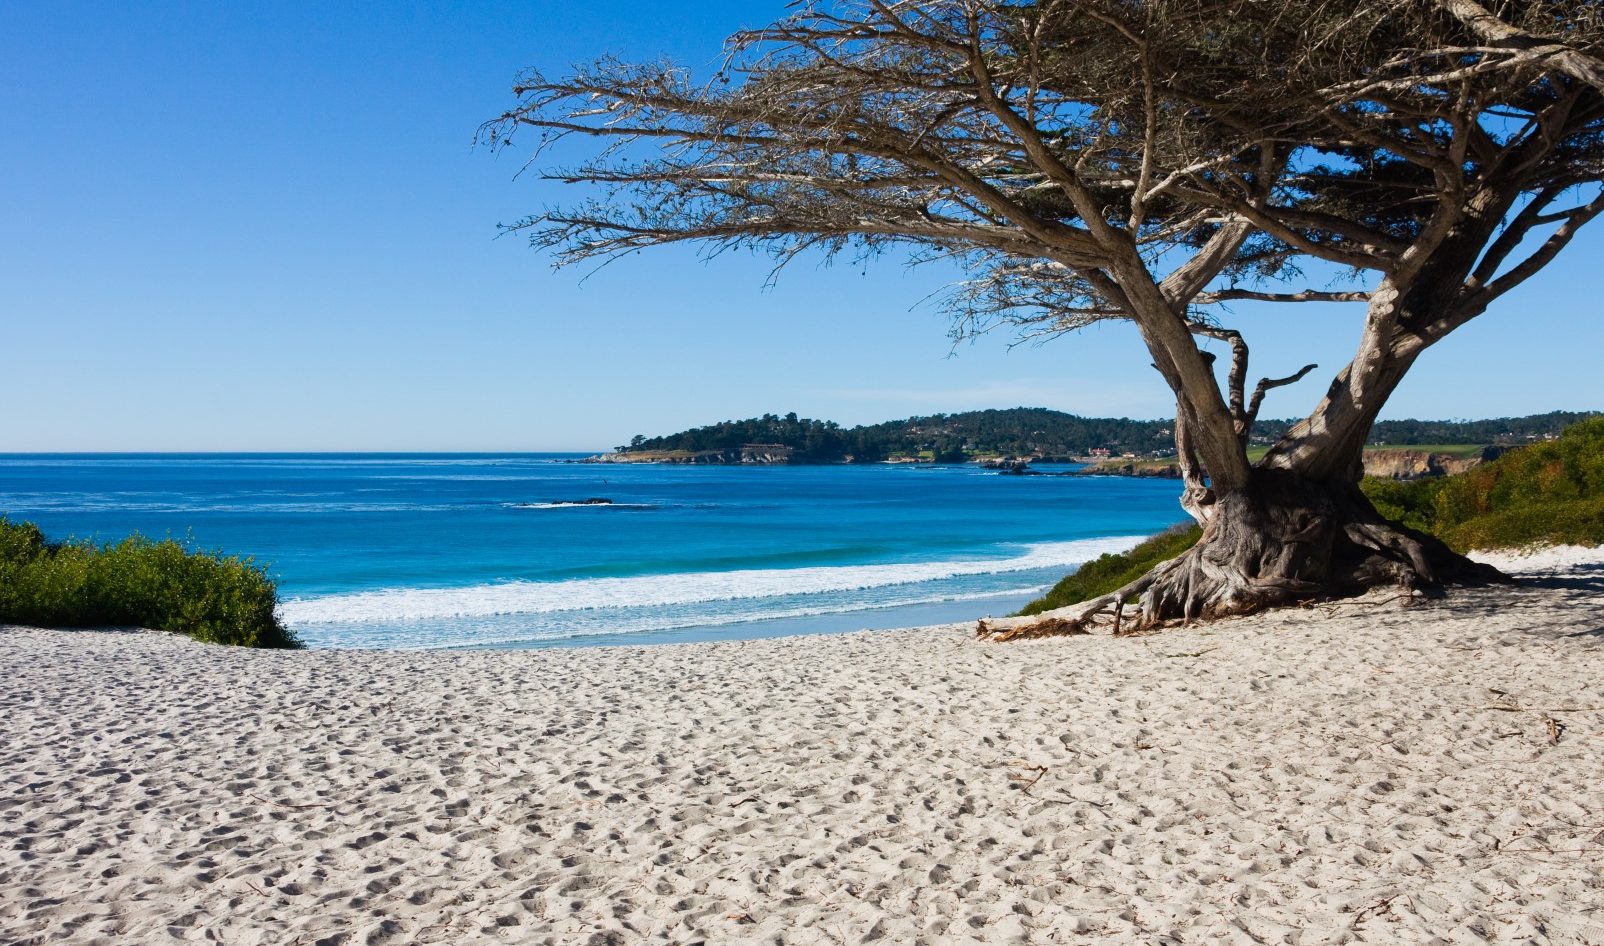 bigs-Carmel-City-Beach-with-tree-5860385-Large-e1491340866950